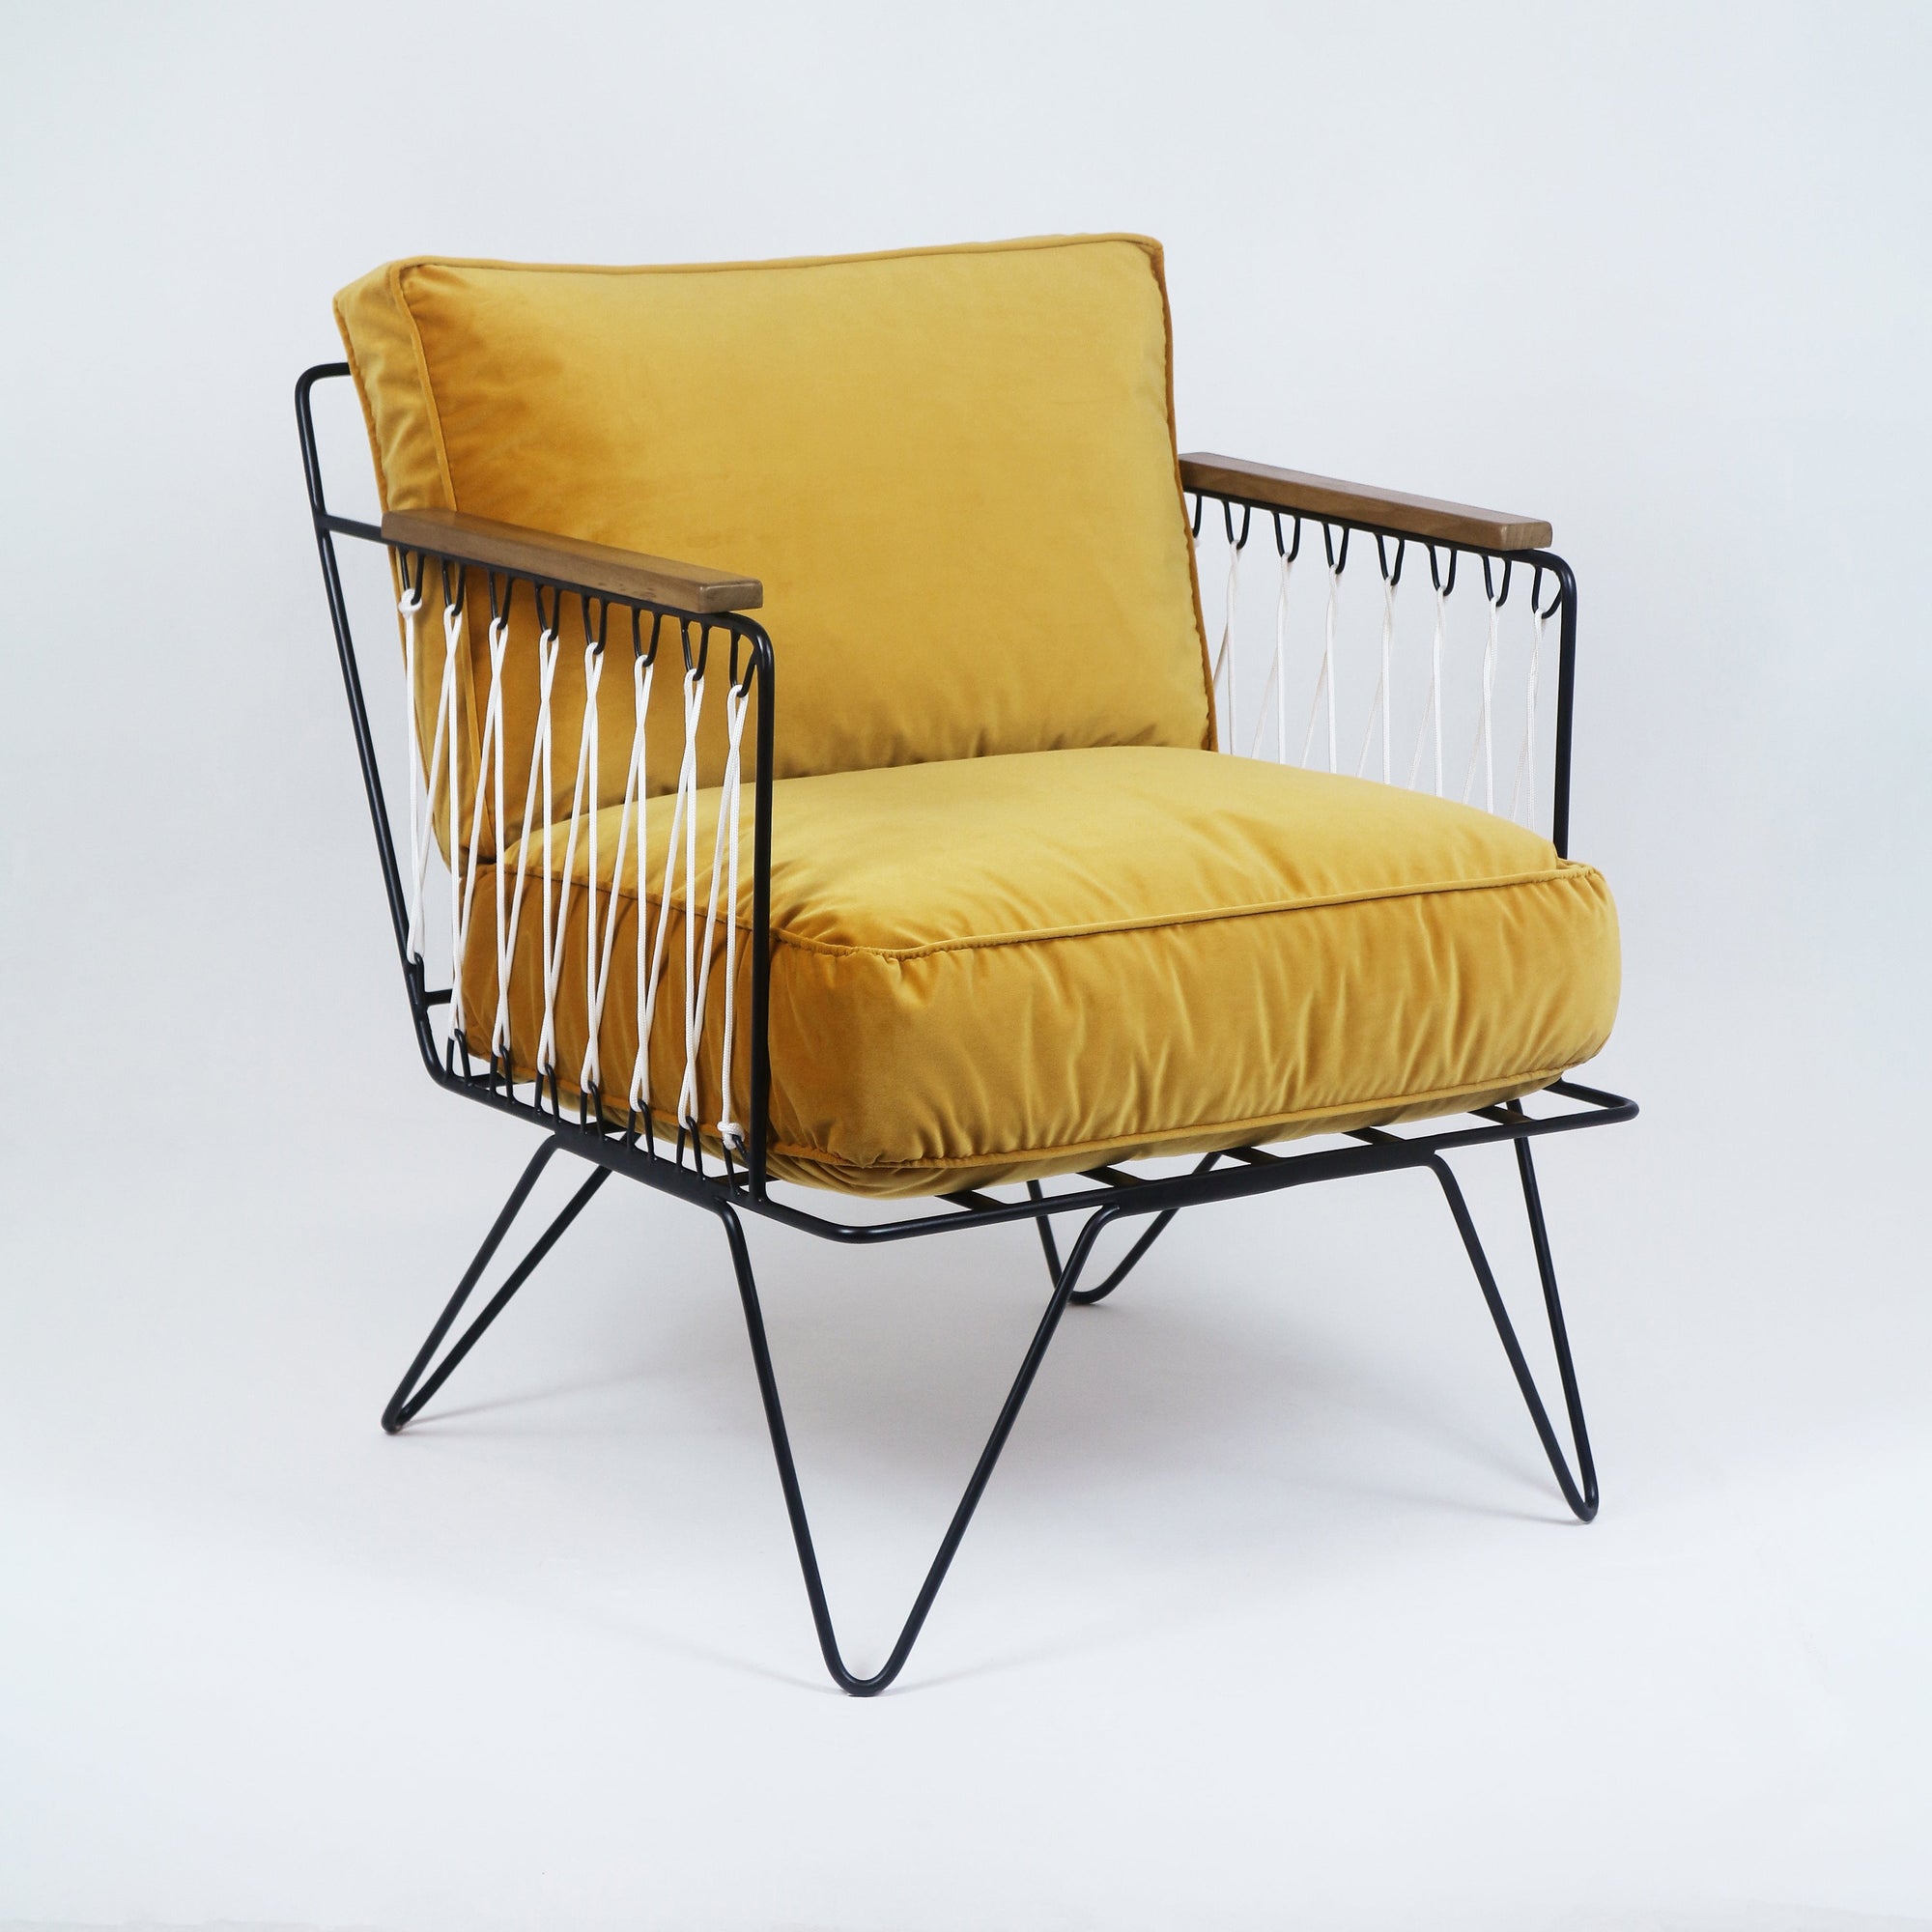 The Croisette English Summer Chair - INTERIORTONIC